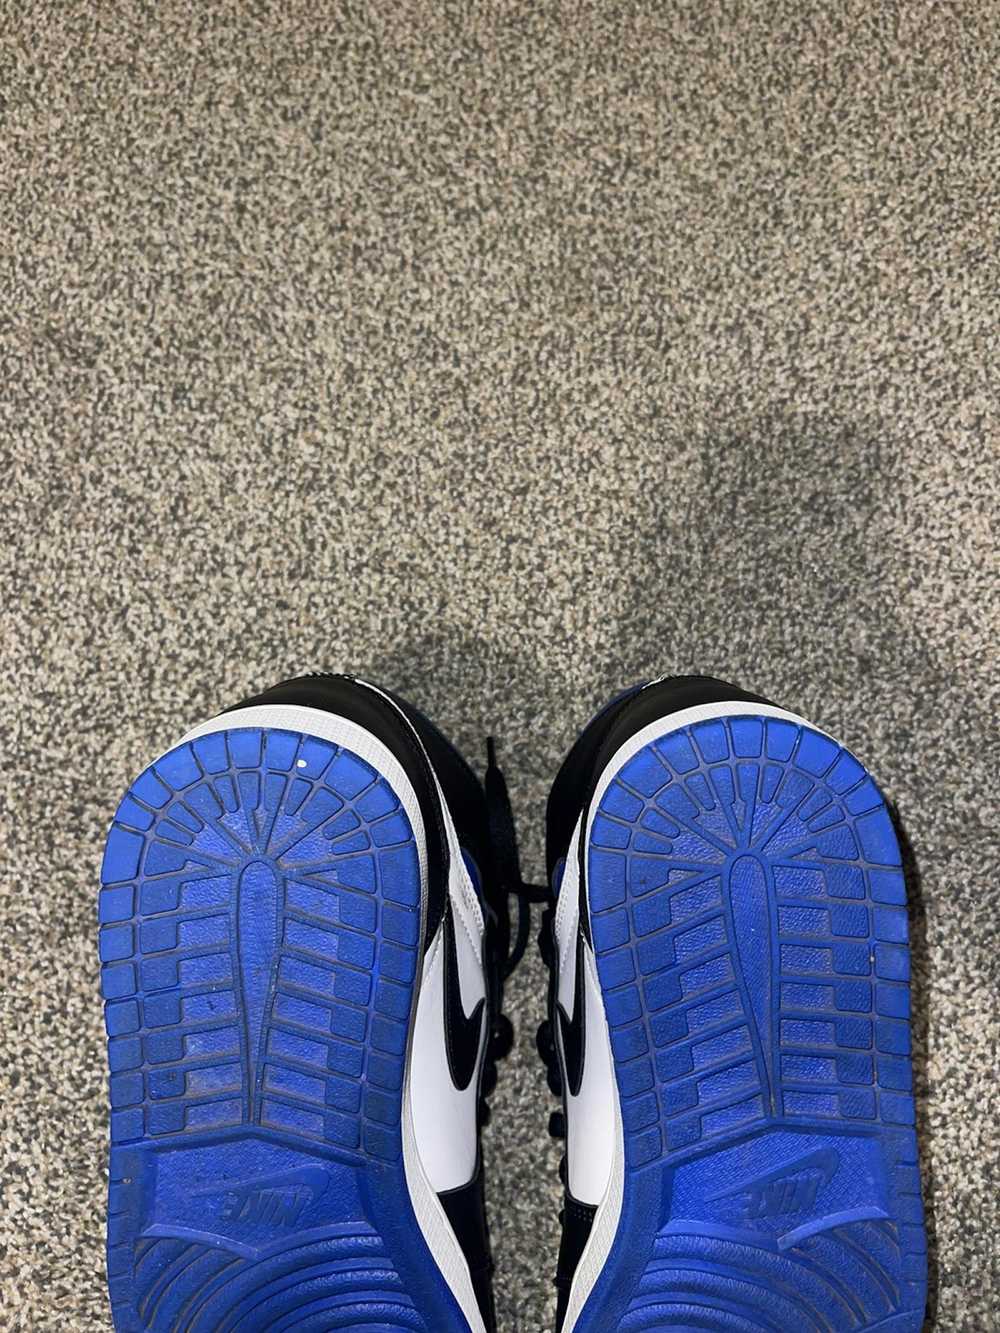 Jordan Brand × Nike Jordan Retro 1 ‘Royal Toe’ - image 8